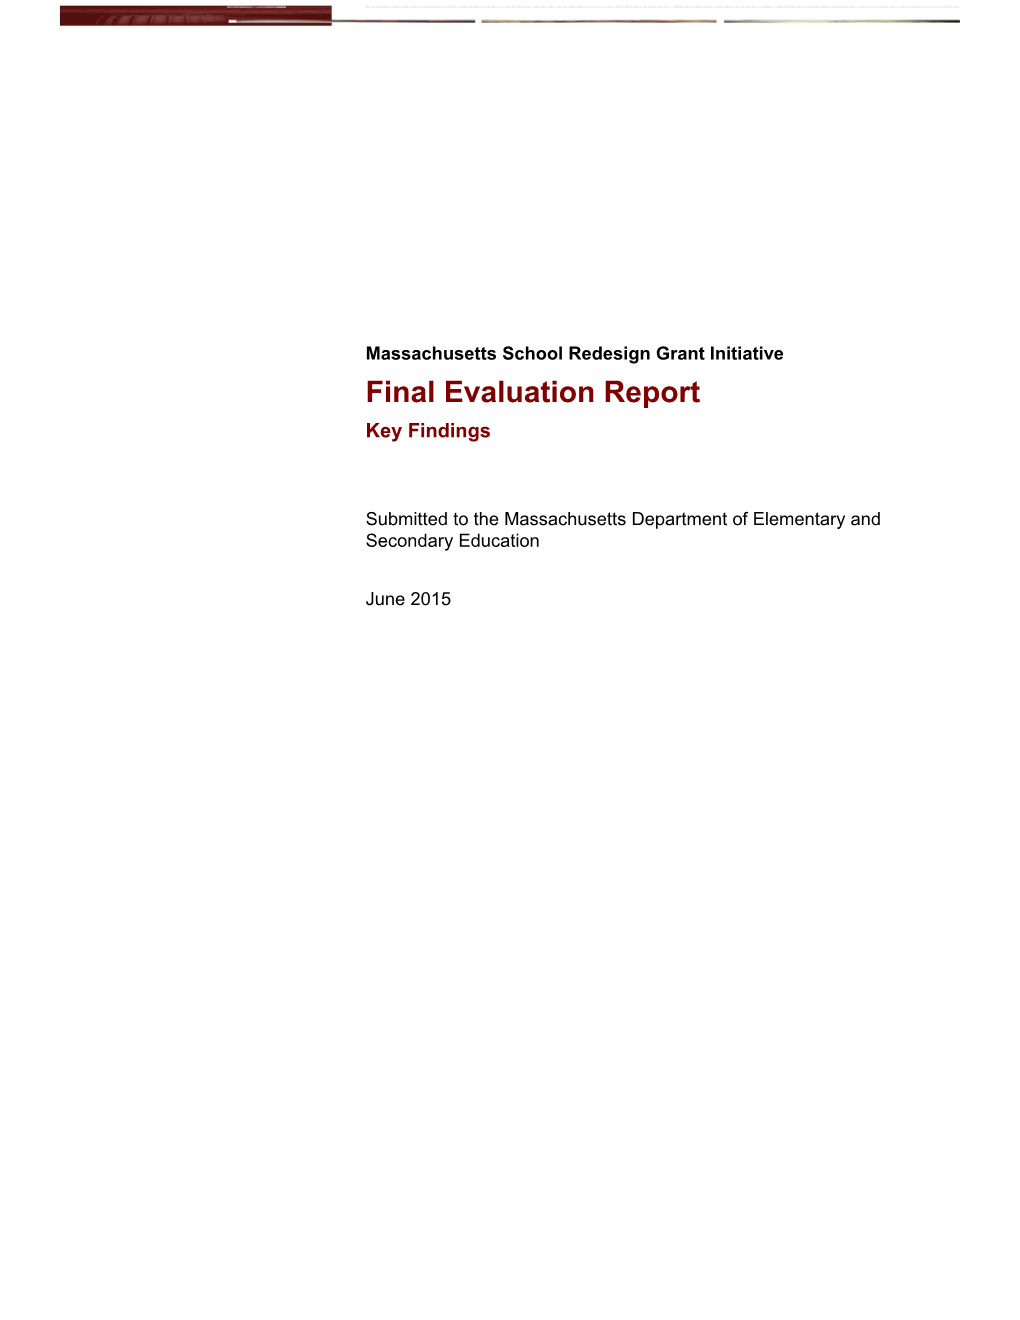 School Redesign Grant Initiative Final Evaluation Report (June 2015)